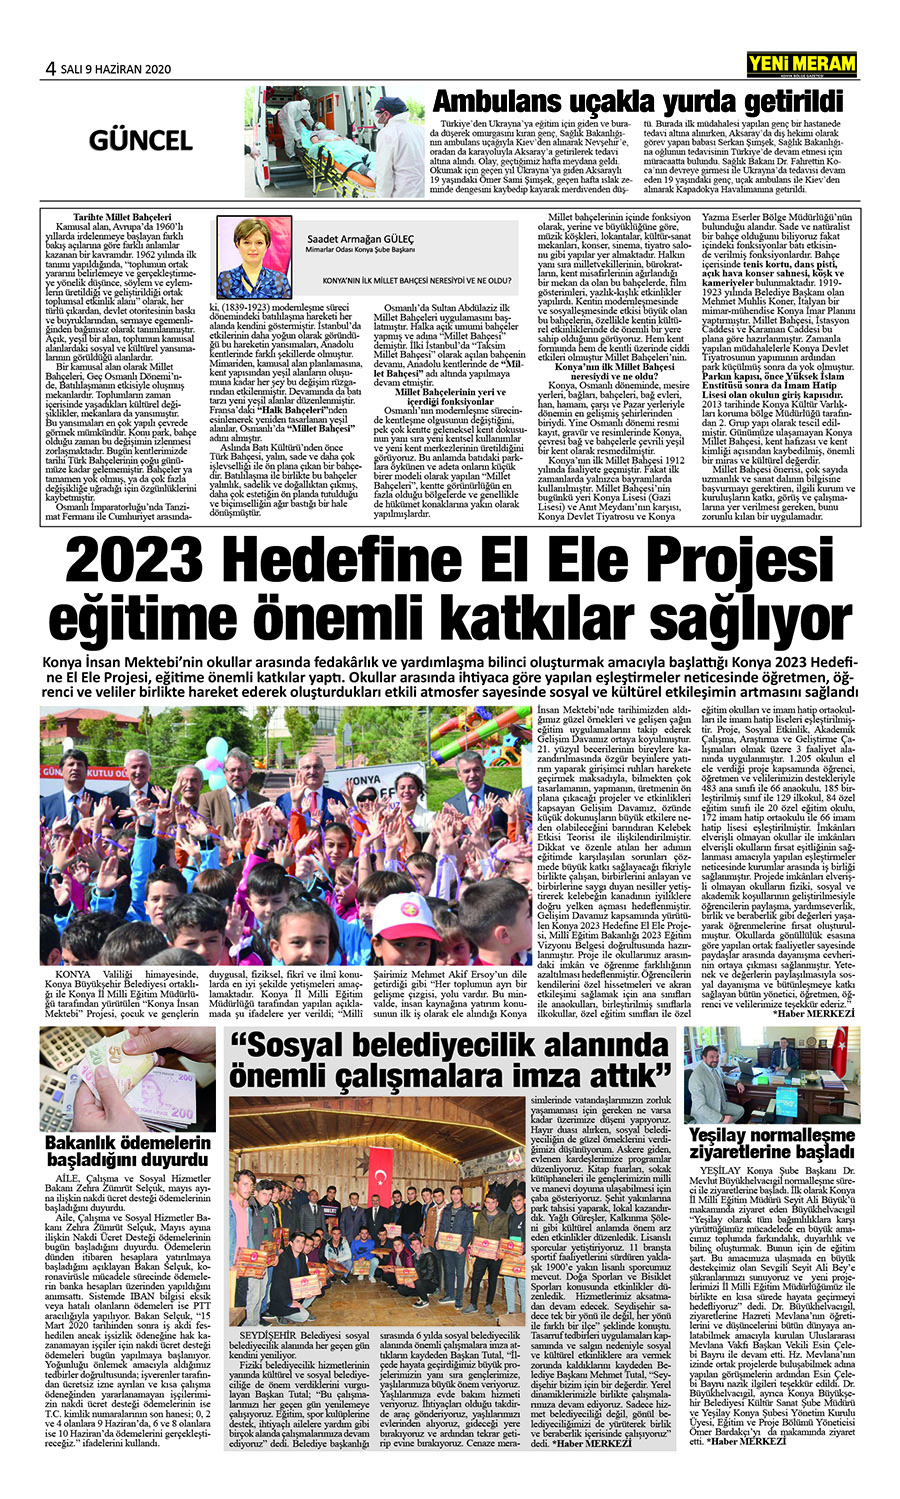 9 Haziran 2020 Yeni Meram Gazetesi